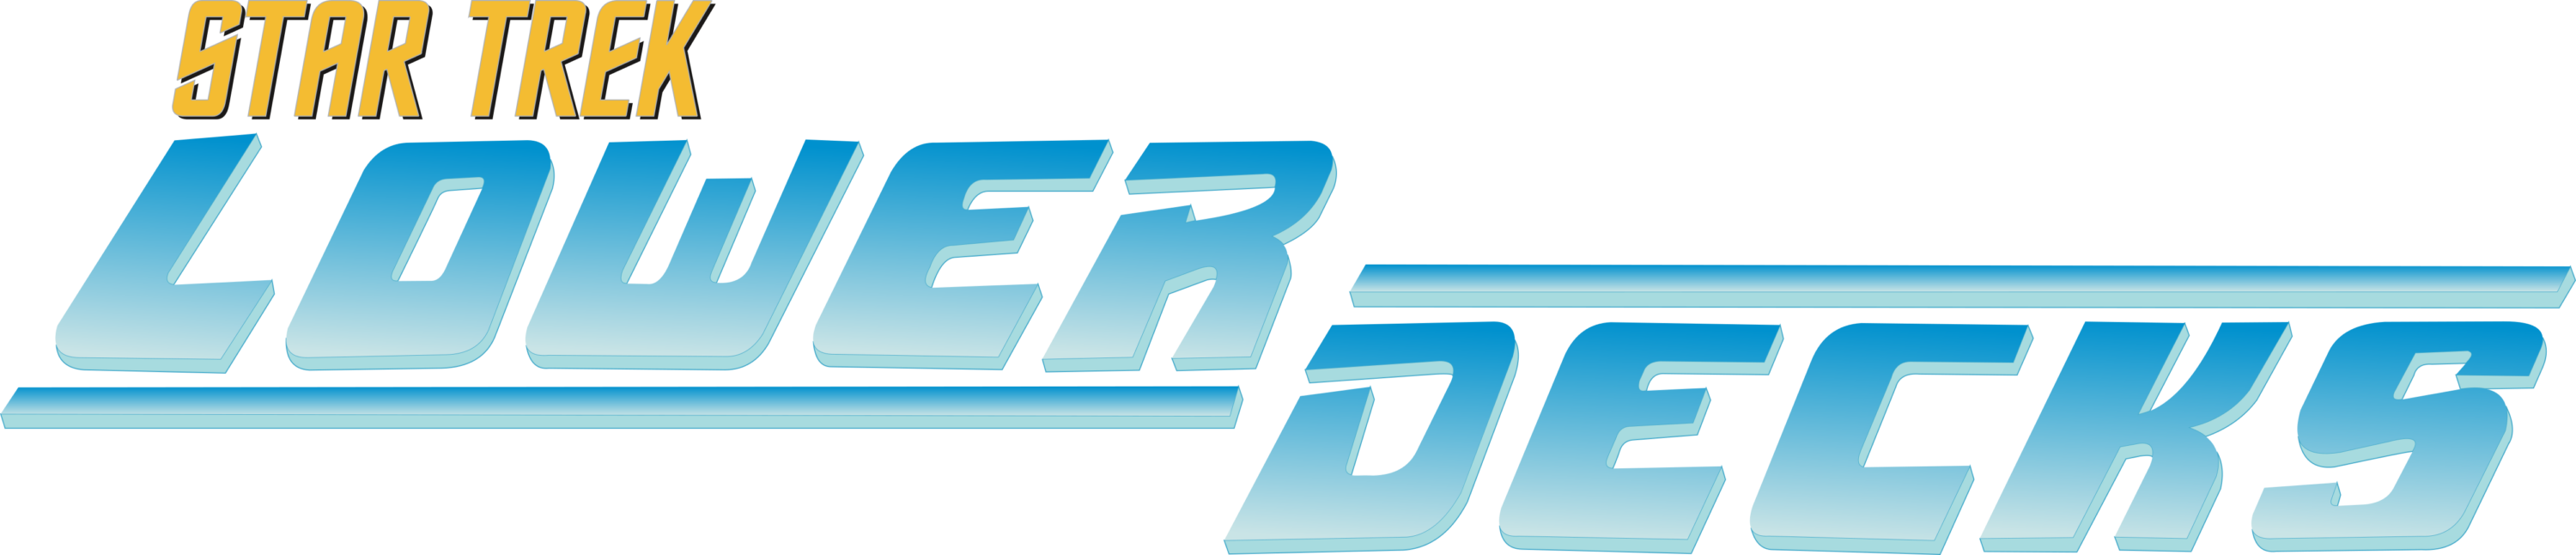 Star Trek Lower Decks Logo